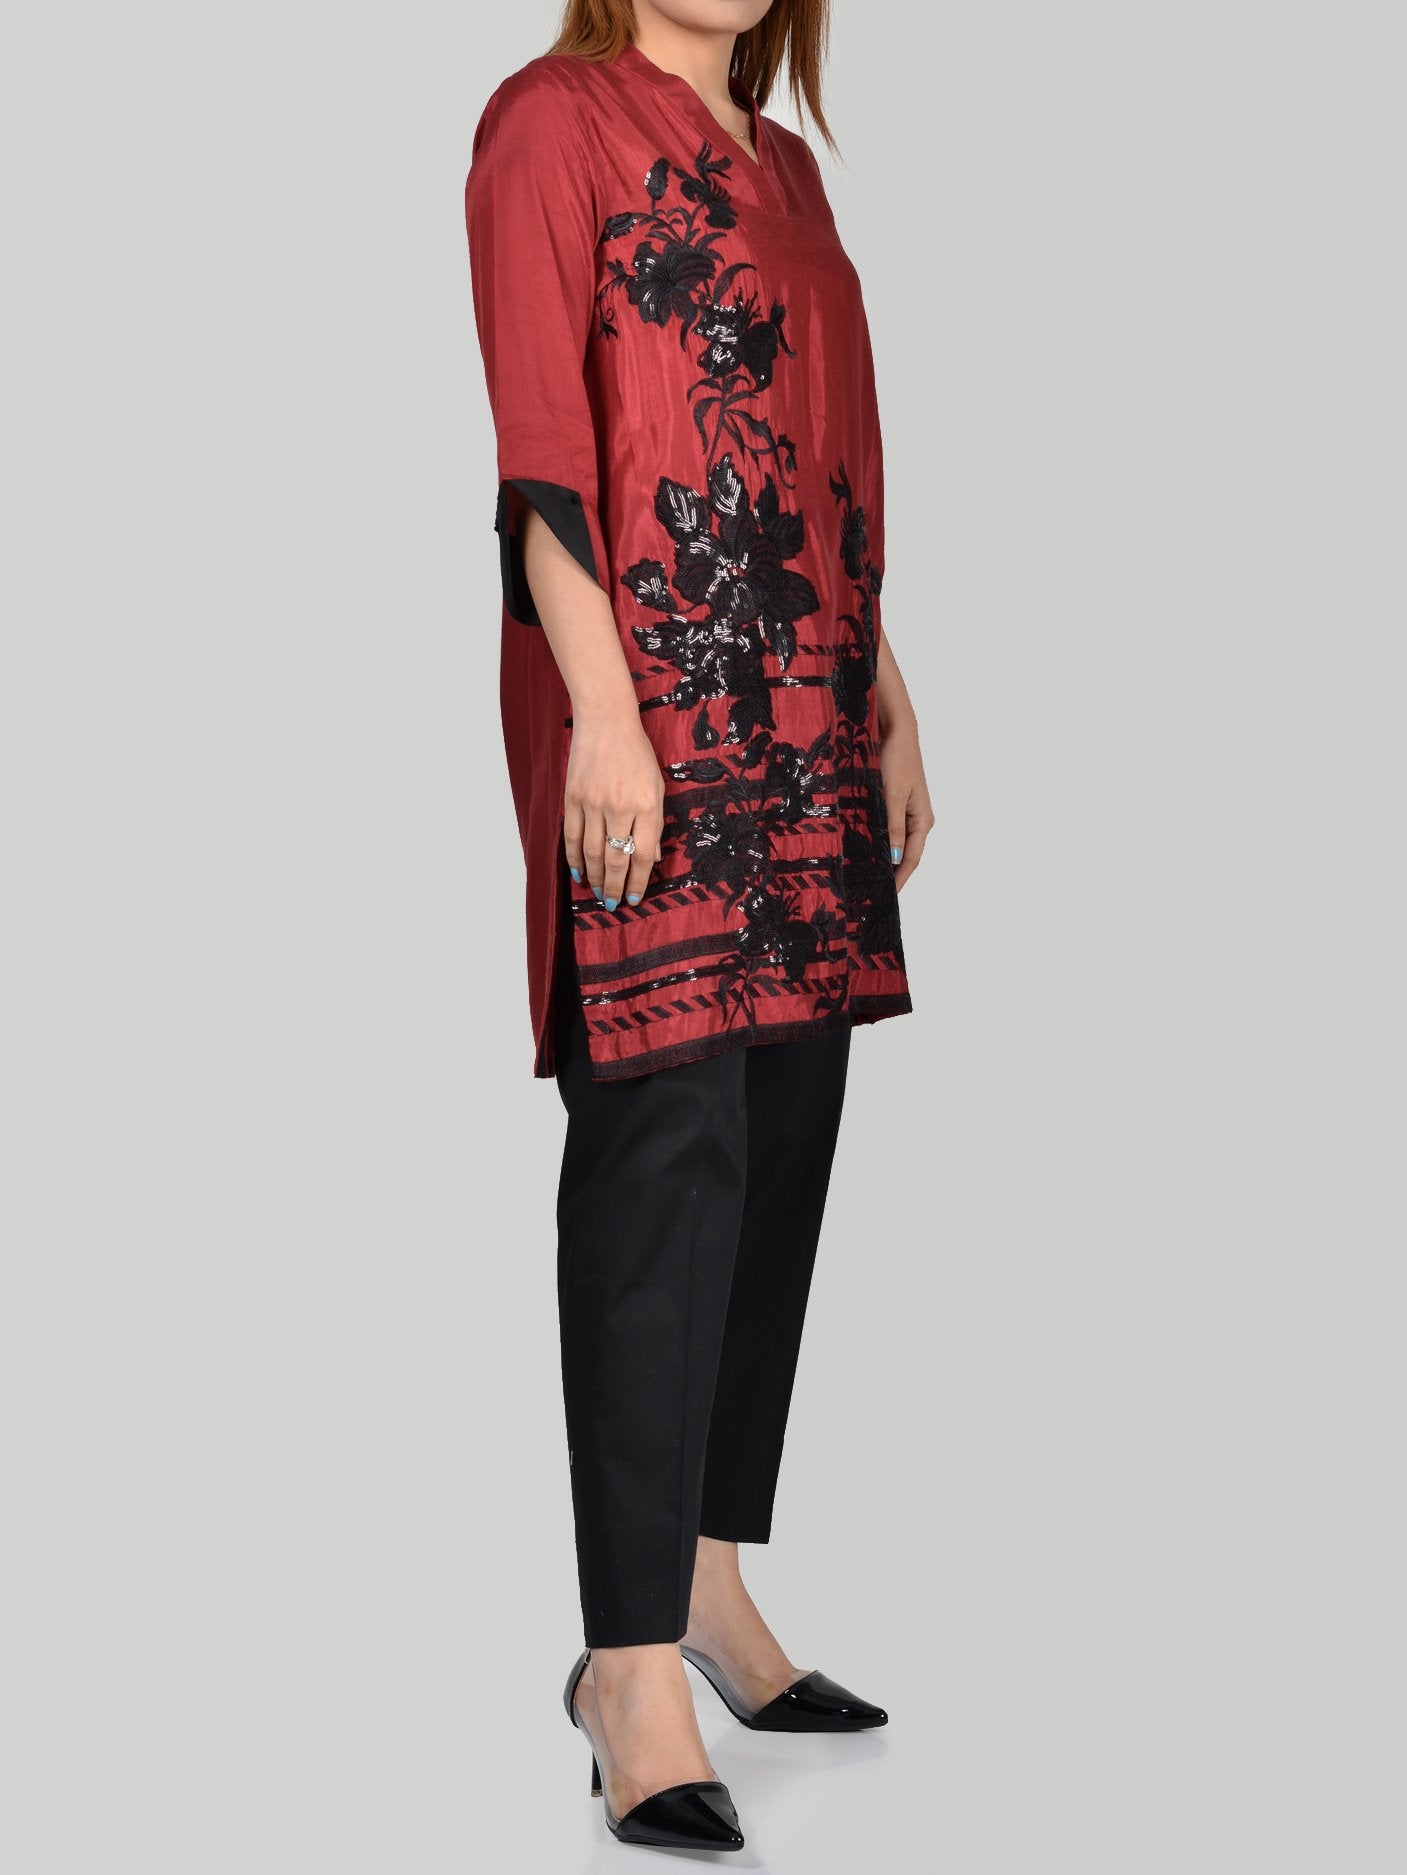 Embellished Silk Shirt (F1764) by Limelight